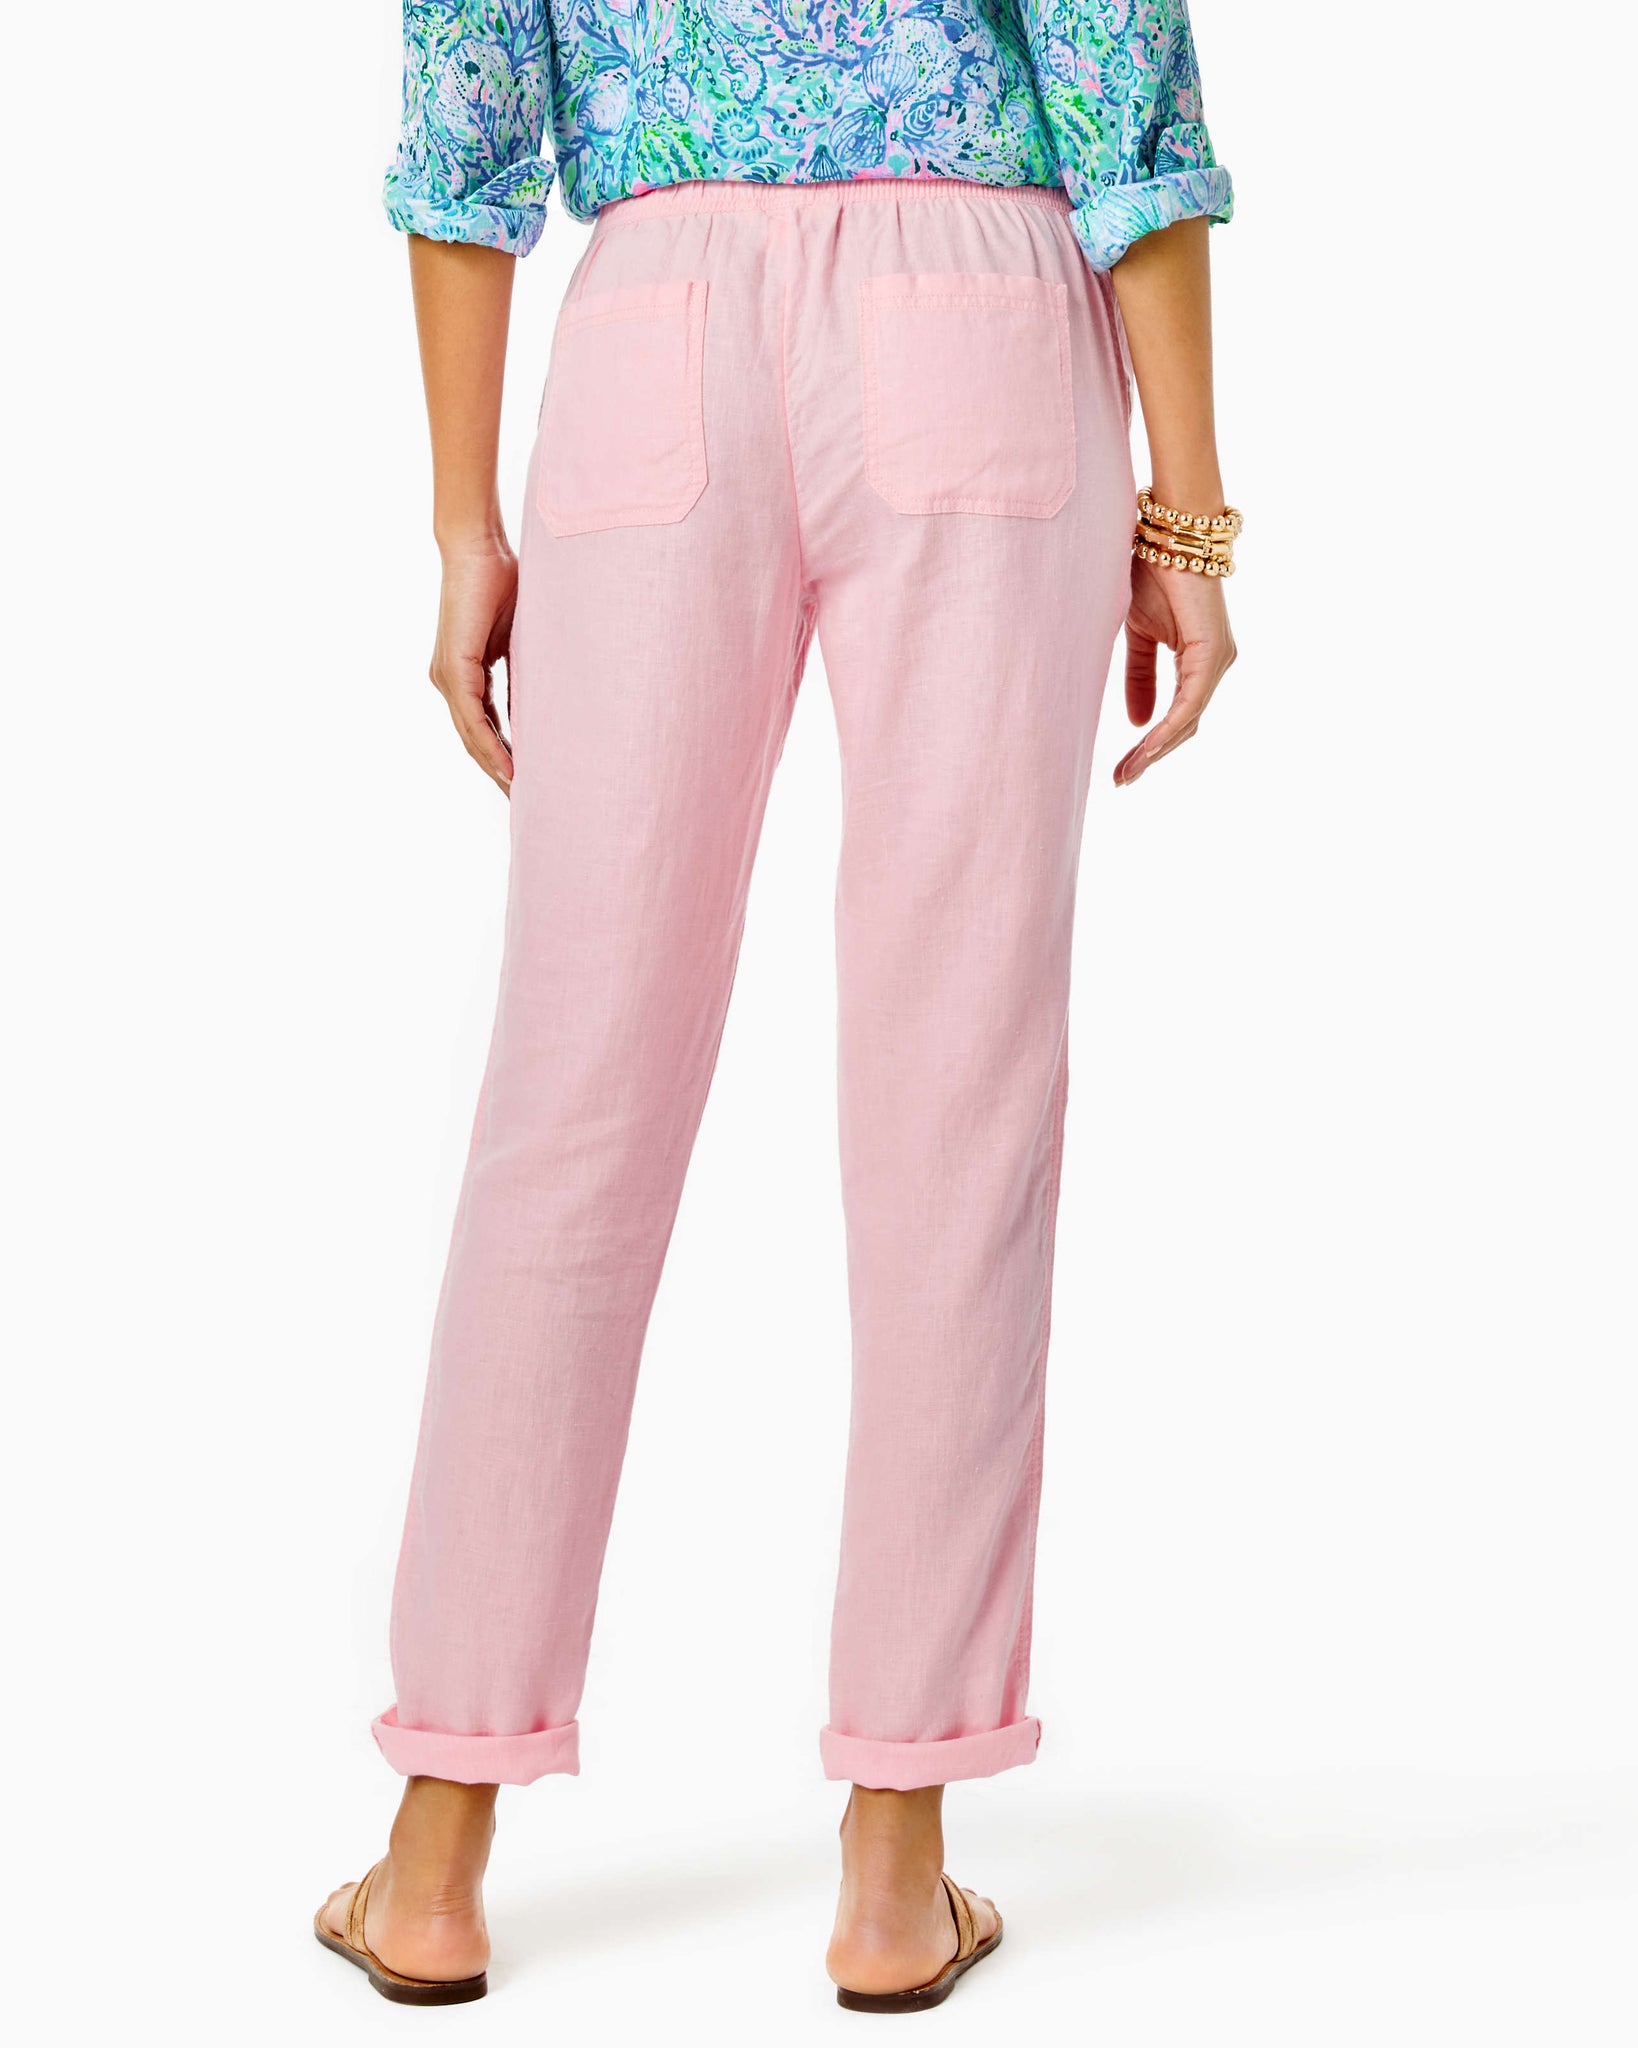 Women's Pink Casual Linen Trousers